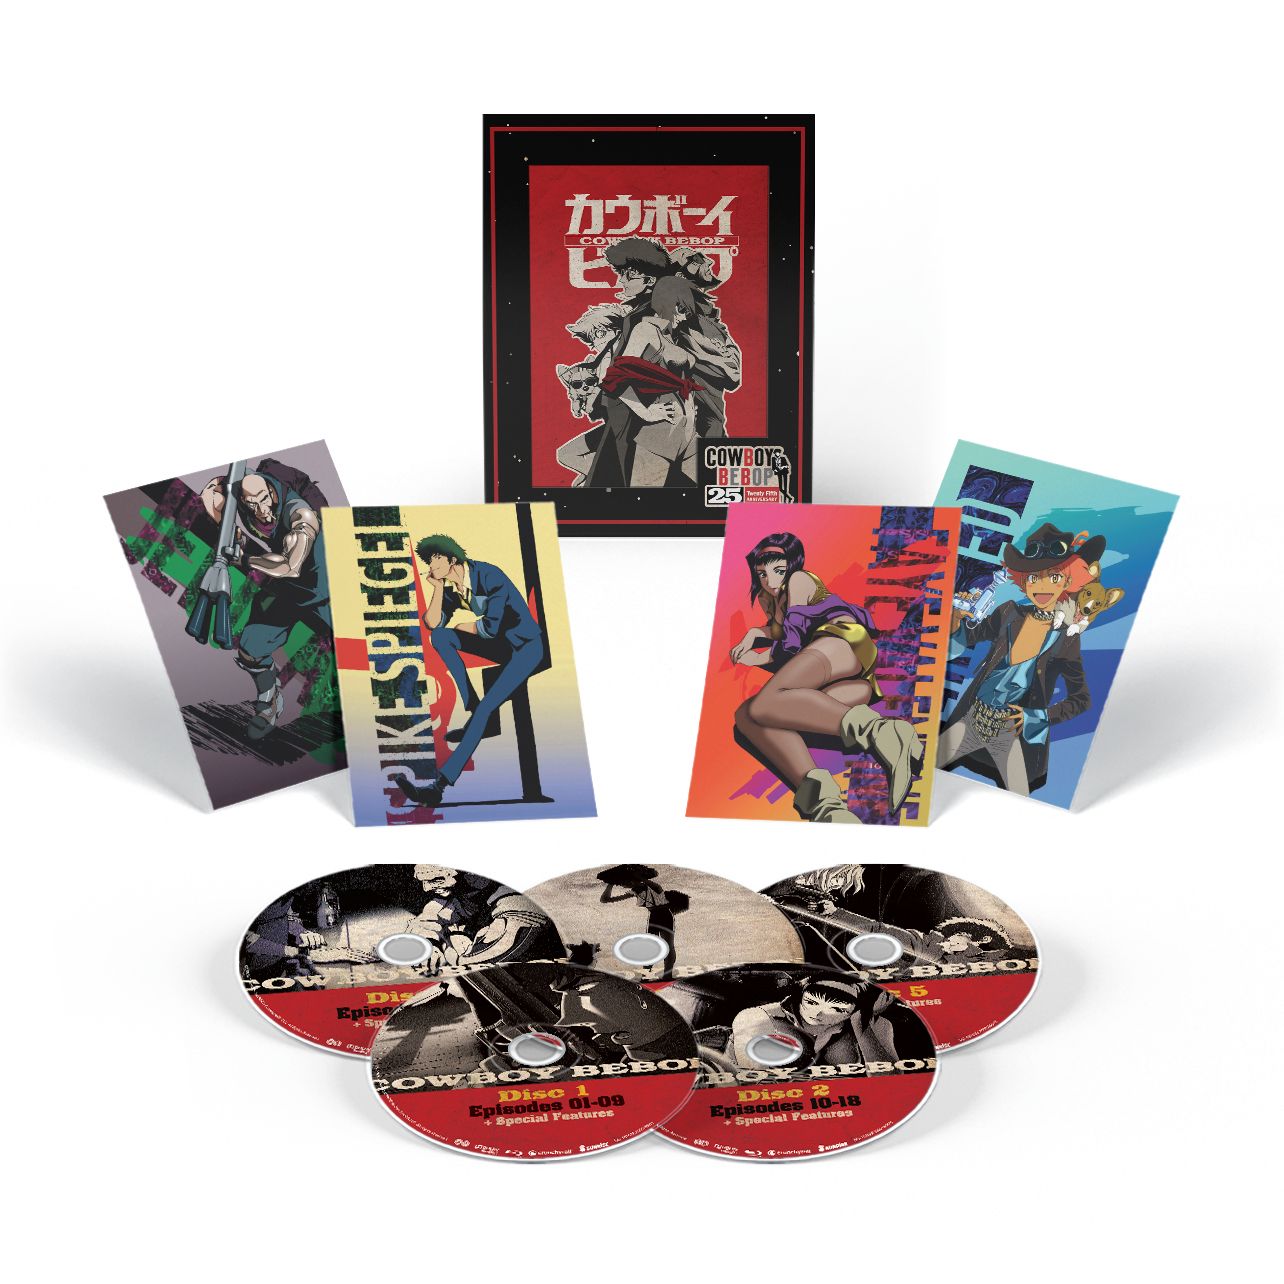 Cowboy Bebop Gets a Loaded Box Set for Its 25th Anniversary